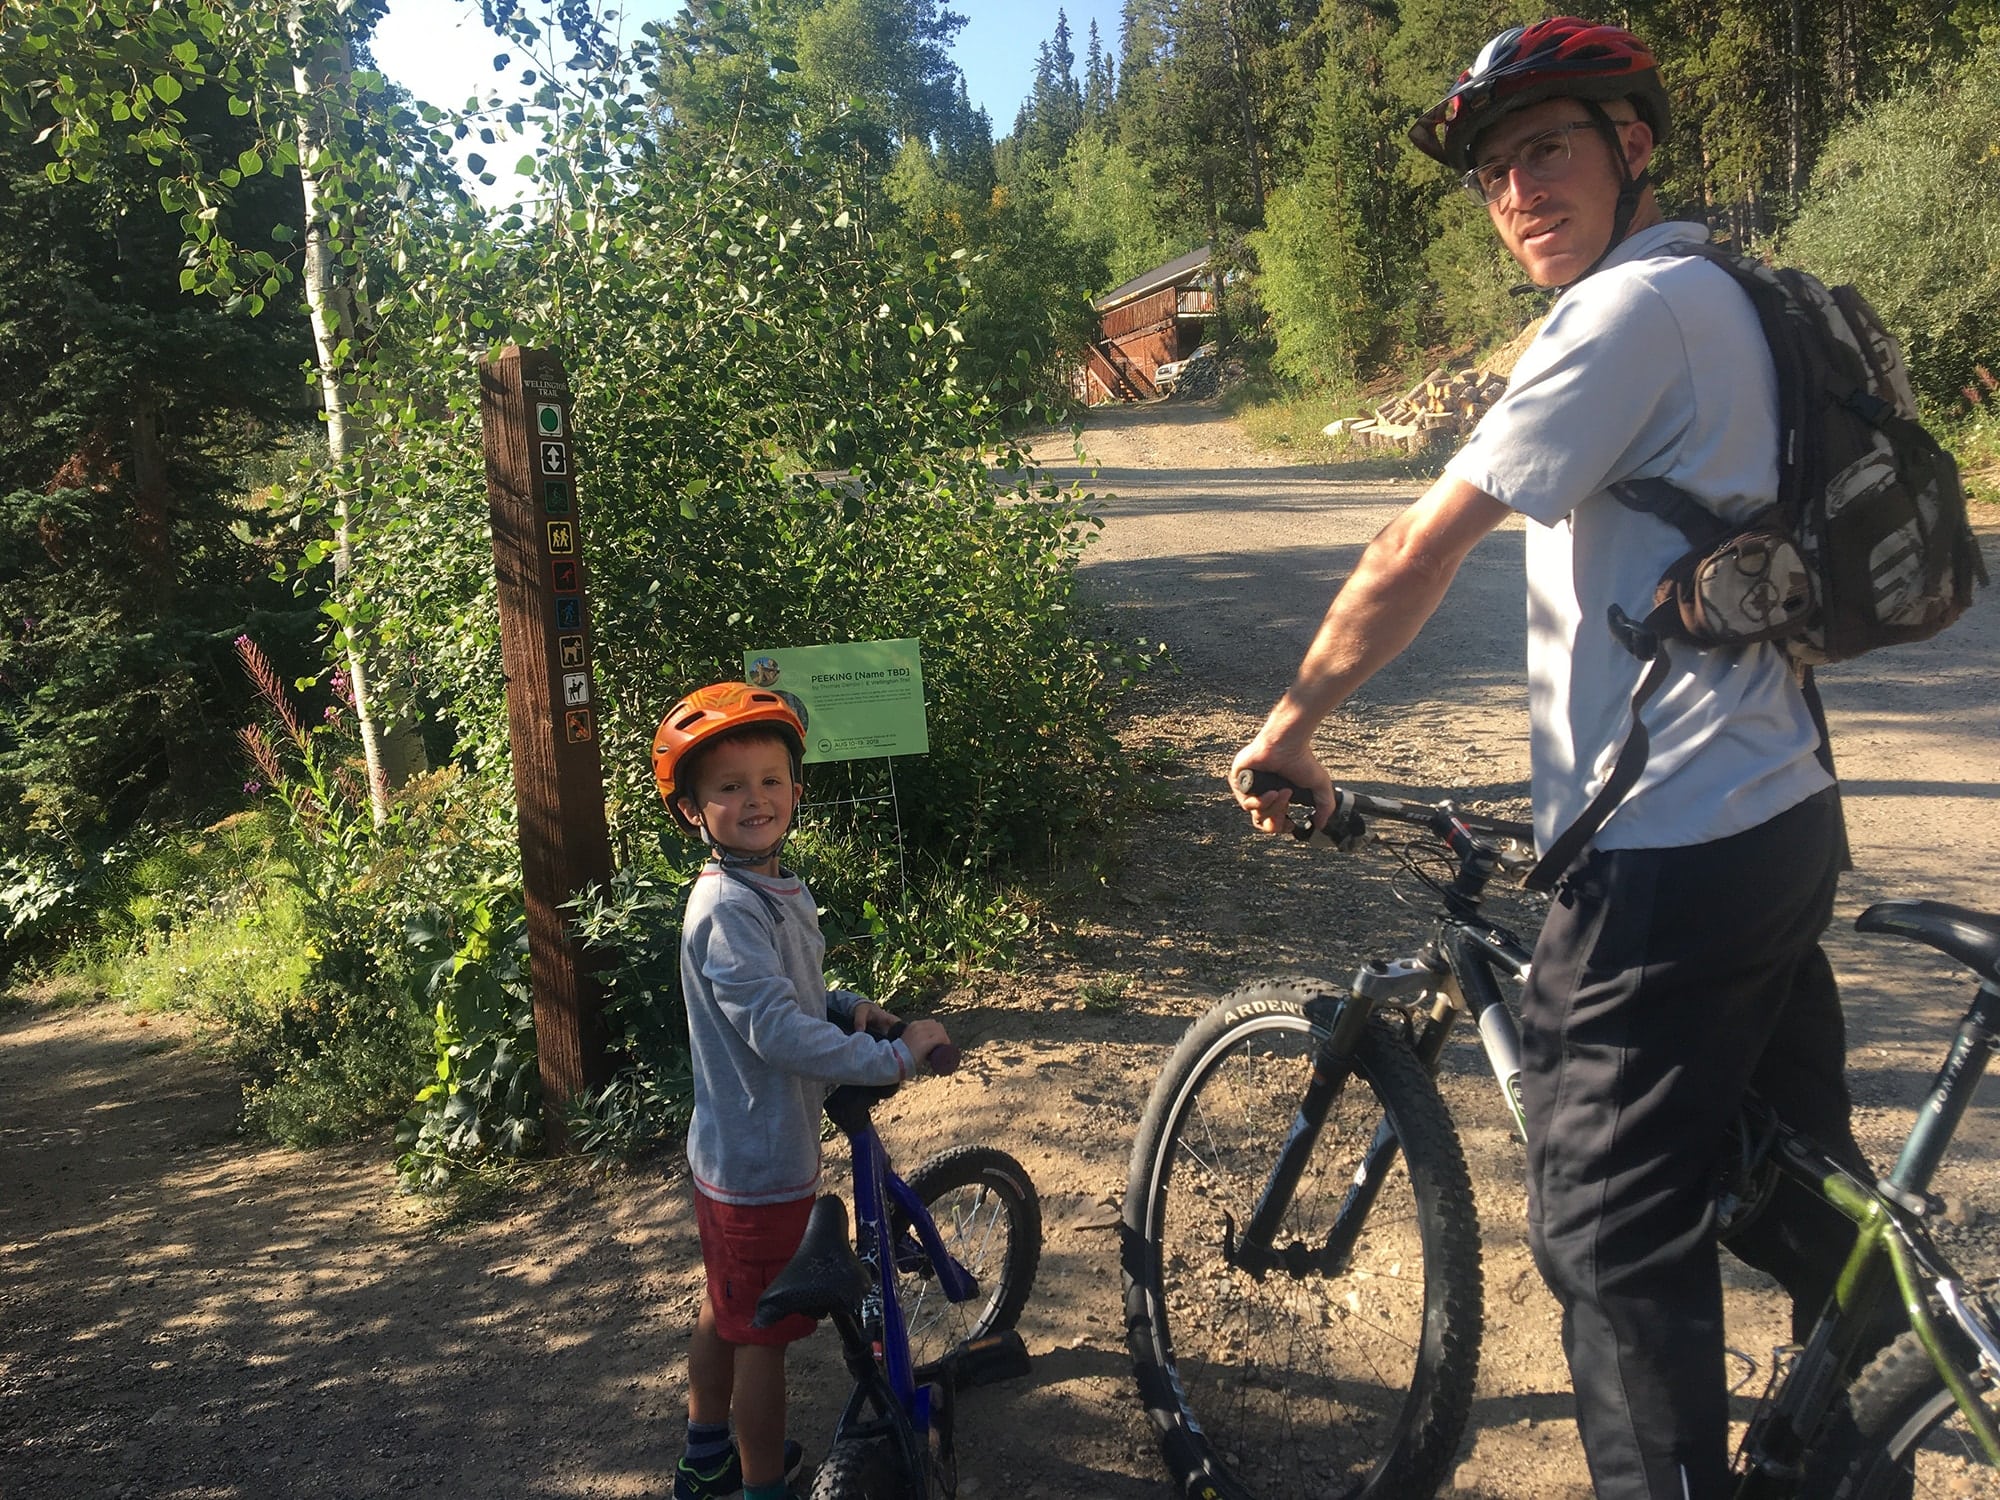 Kid mountain biking on trail with his dad in Breckenridge